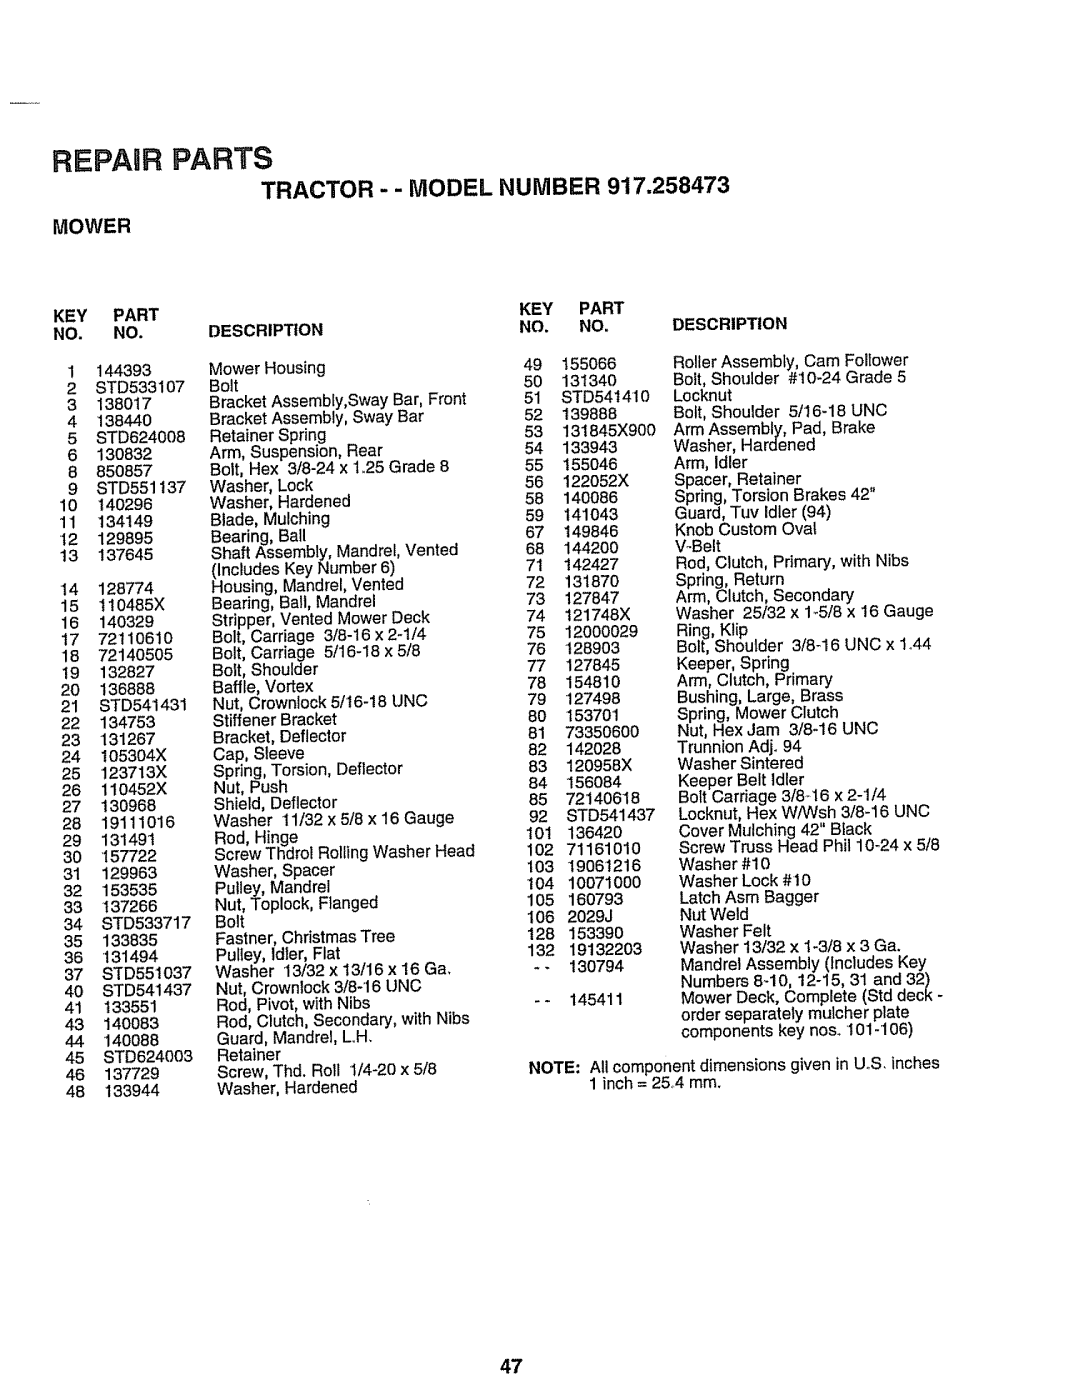 Sears 917.258473 owner manual Repair Parts, Tractor - - Model Number, Mower, Key Part No. No 